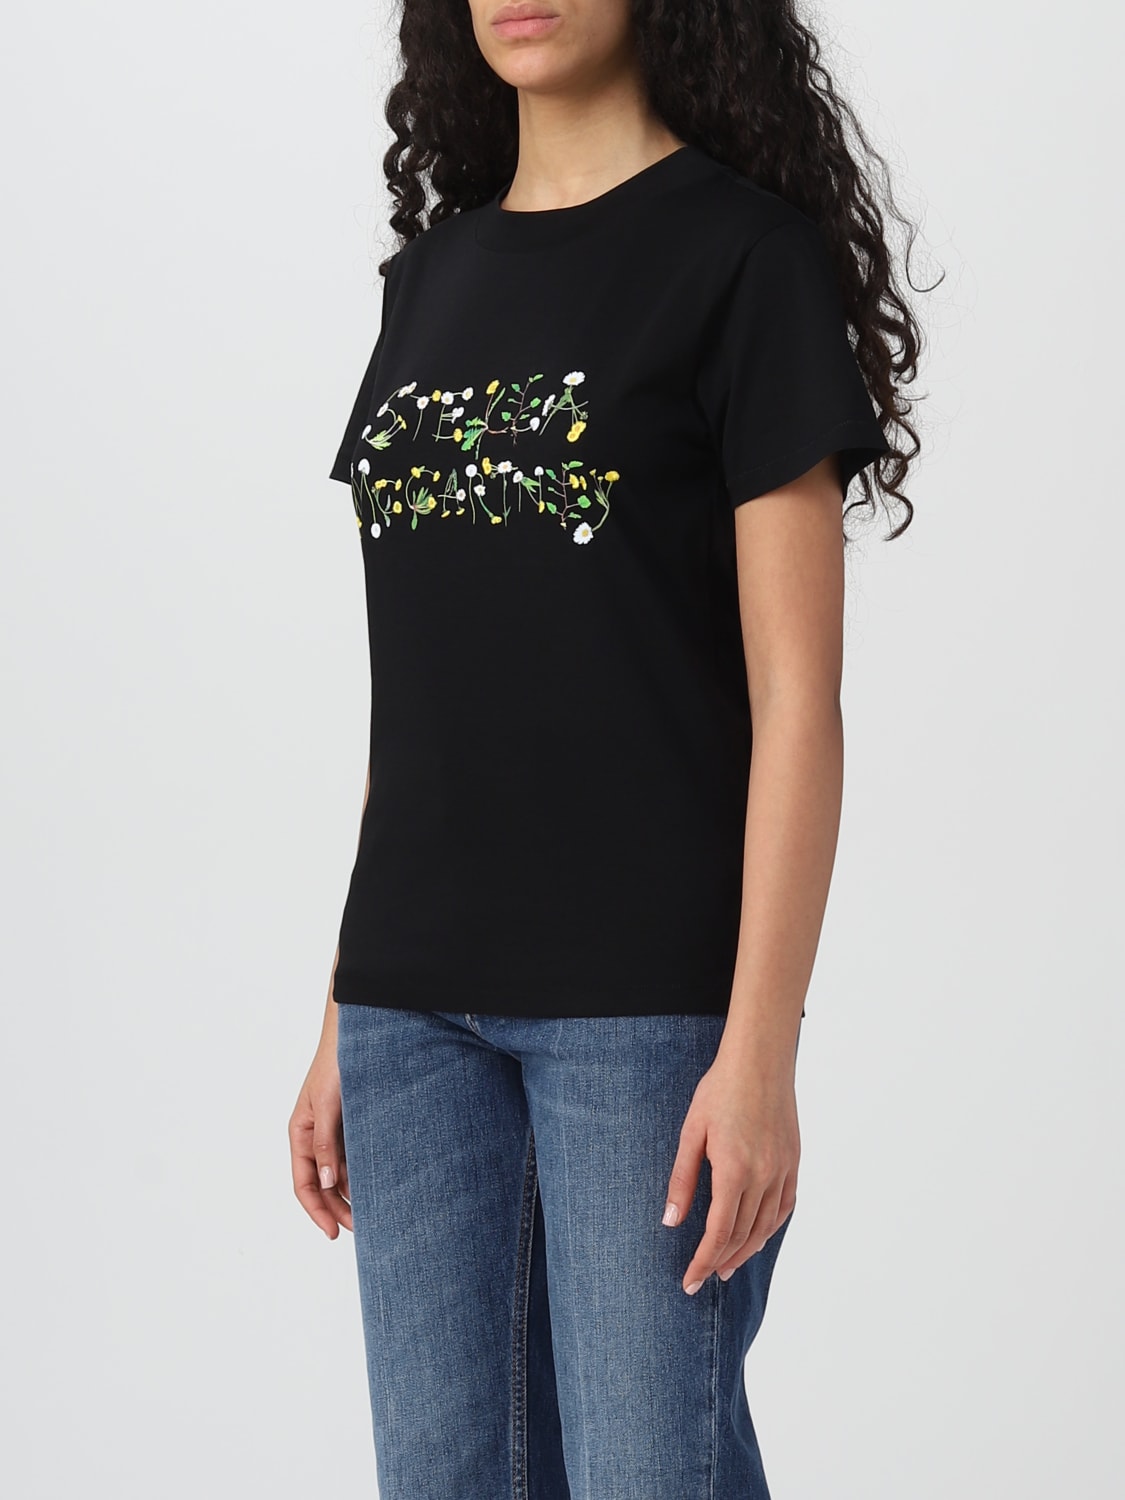 Stella McCartney T-shirt With Logo in Black